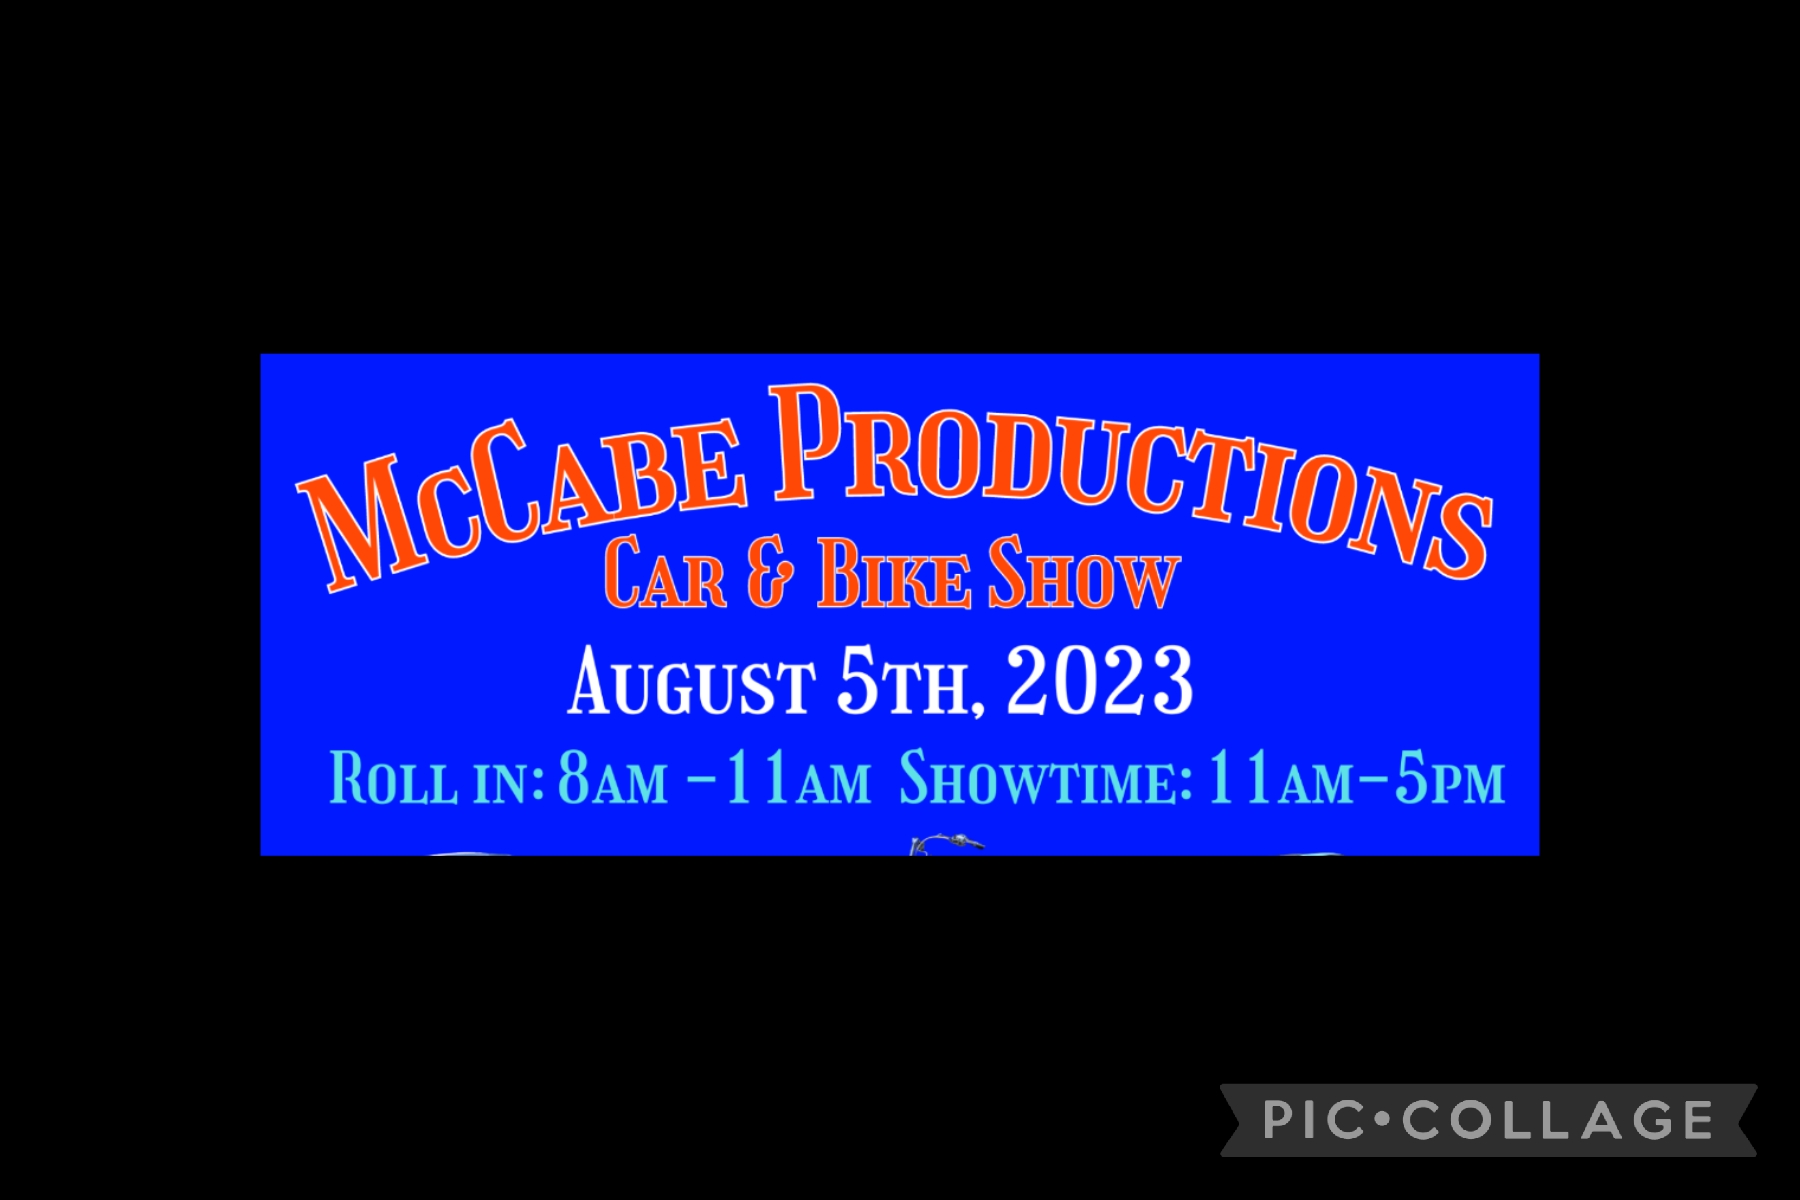 McCabe Productions Car & Bike Show